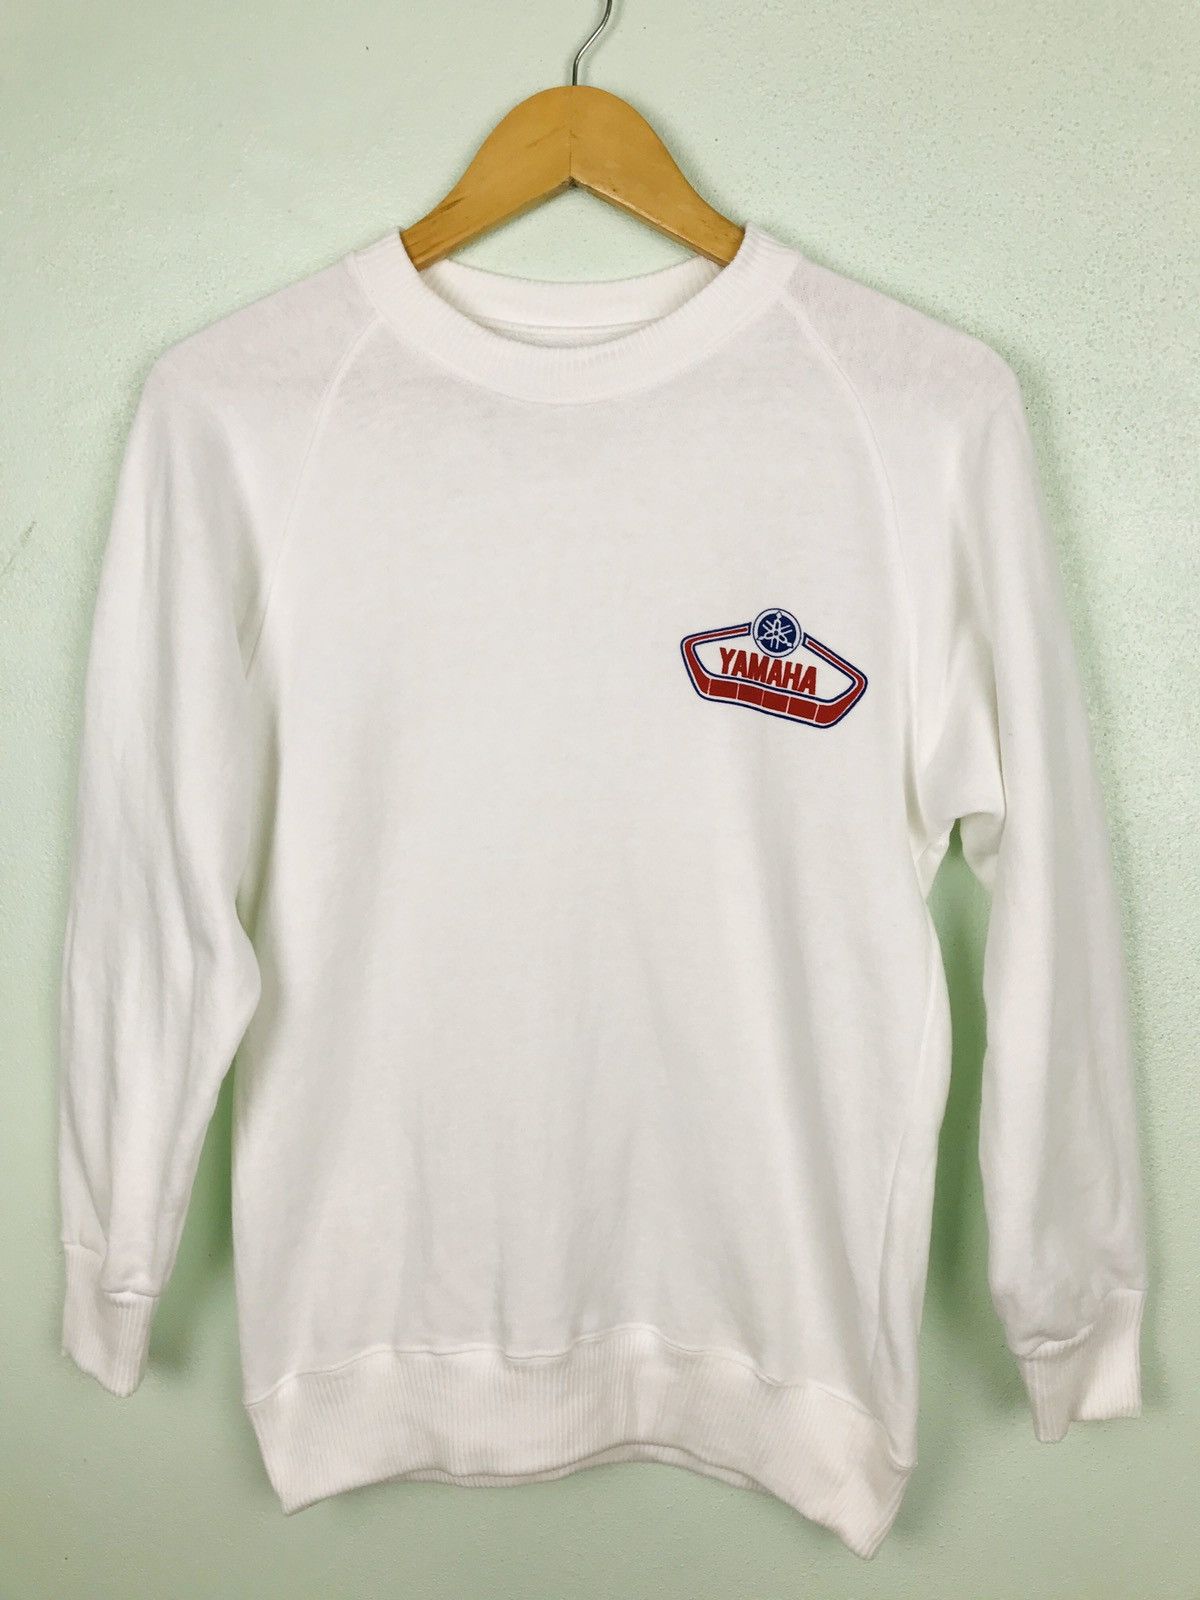 LAST DROP!! Vintage yamaha sweatshirt - gh0120 - 1